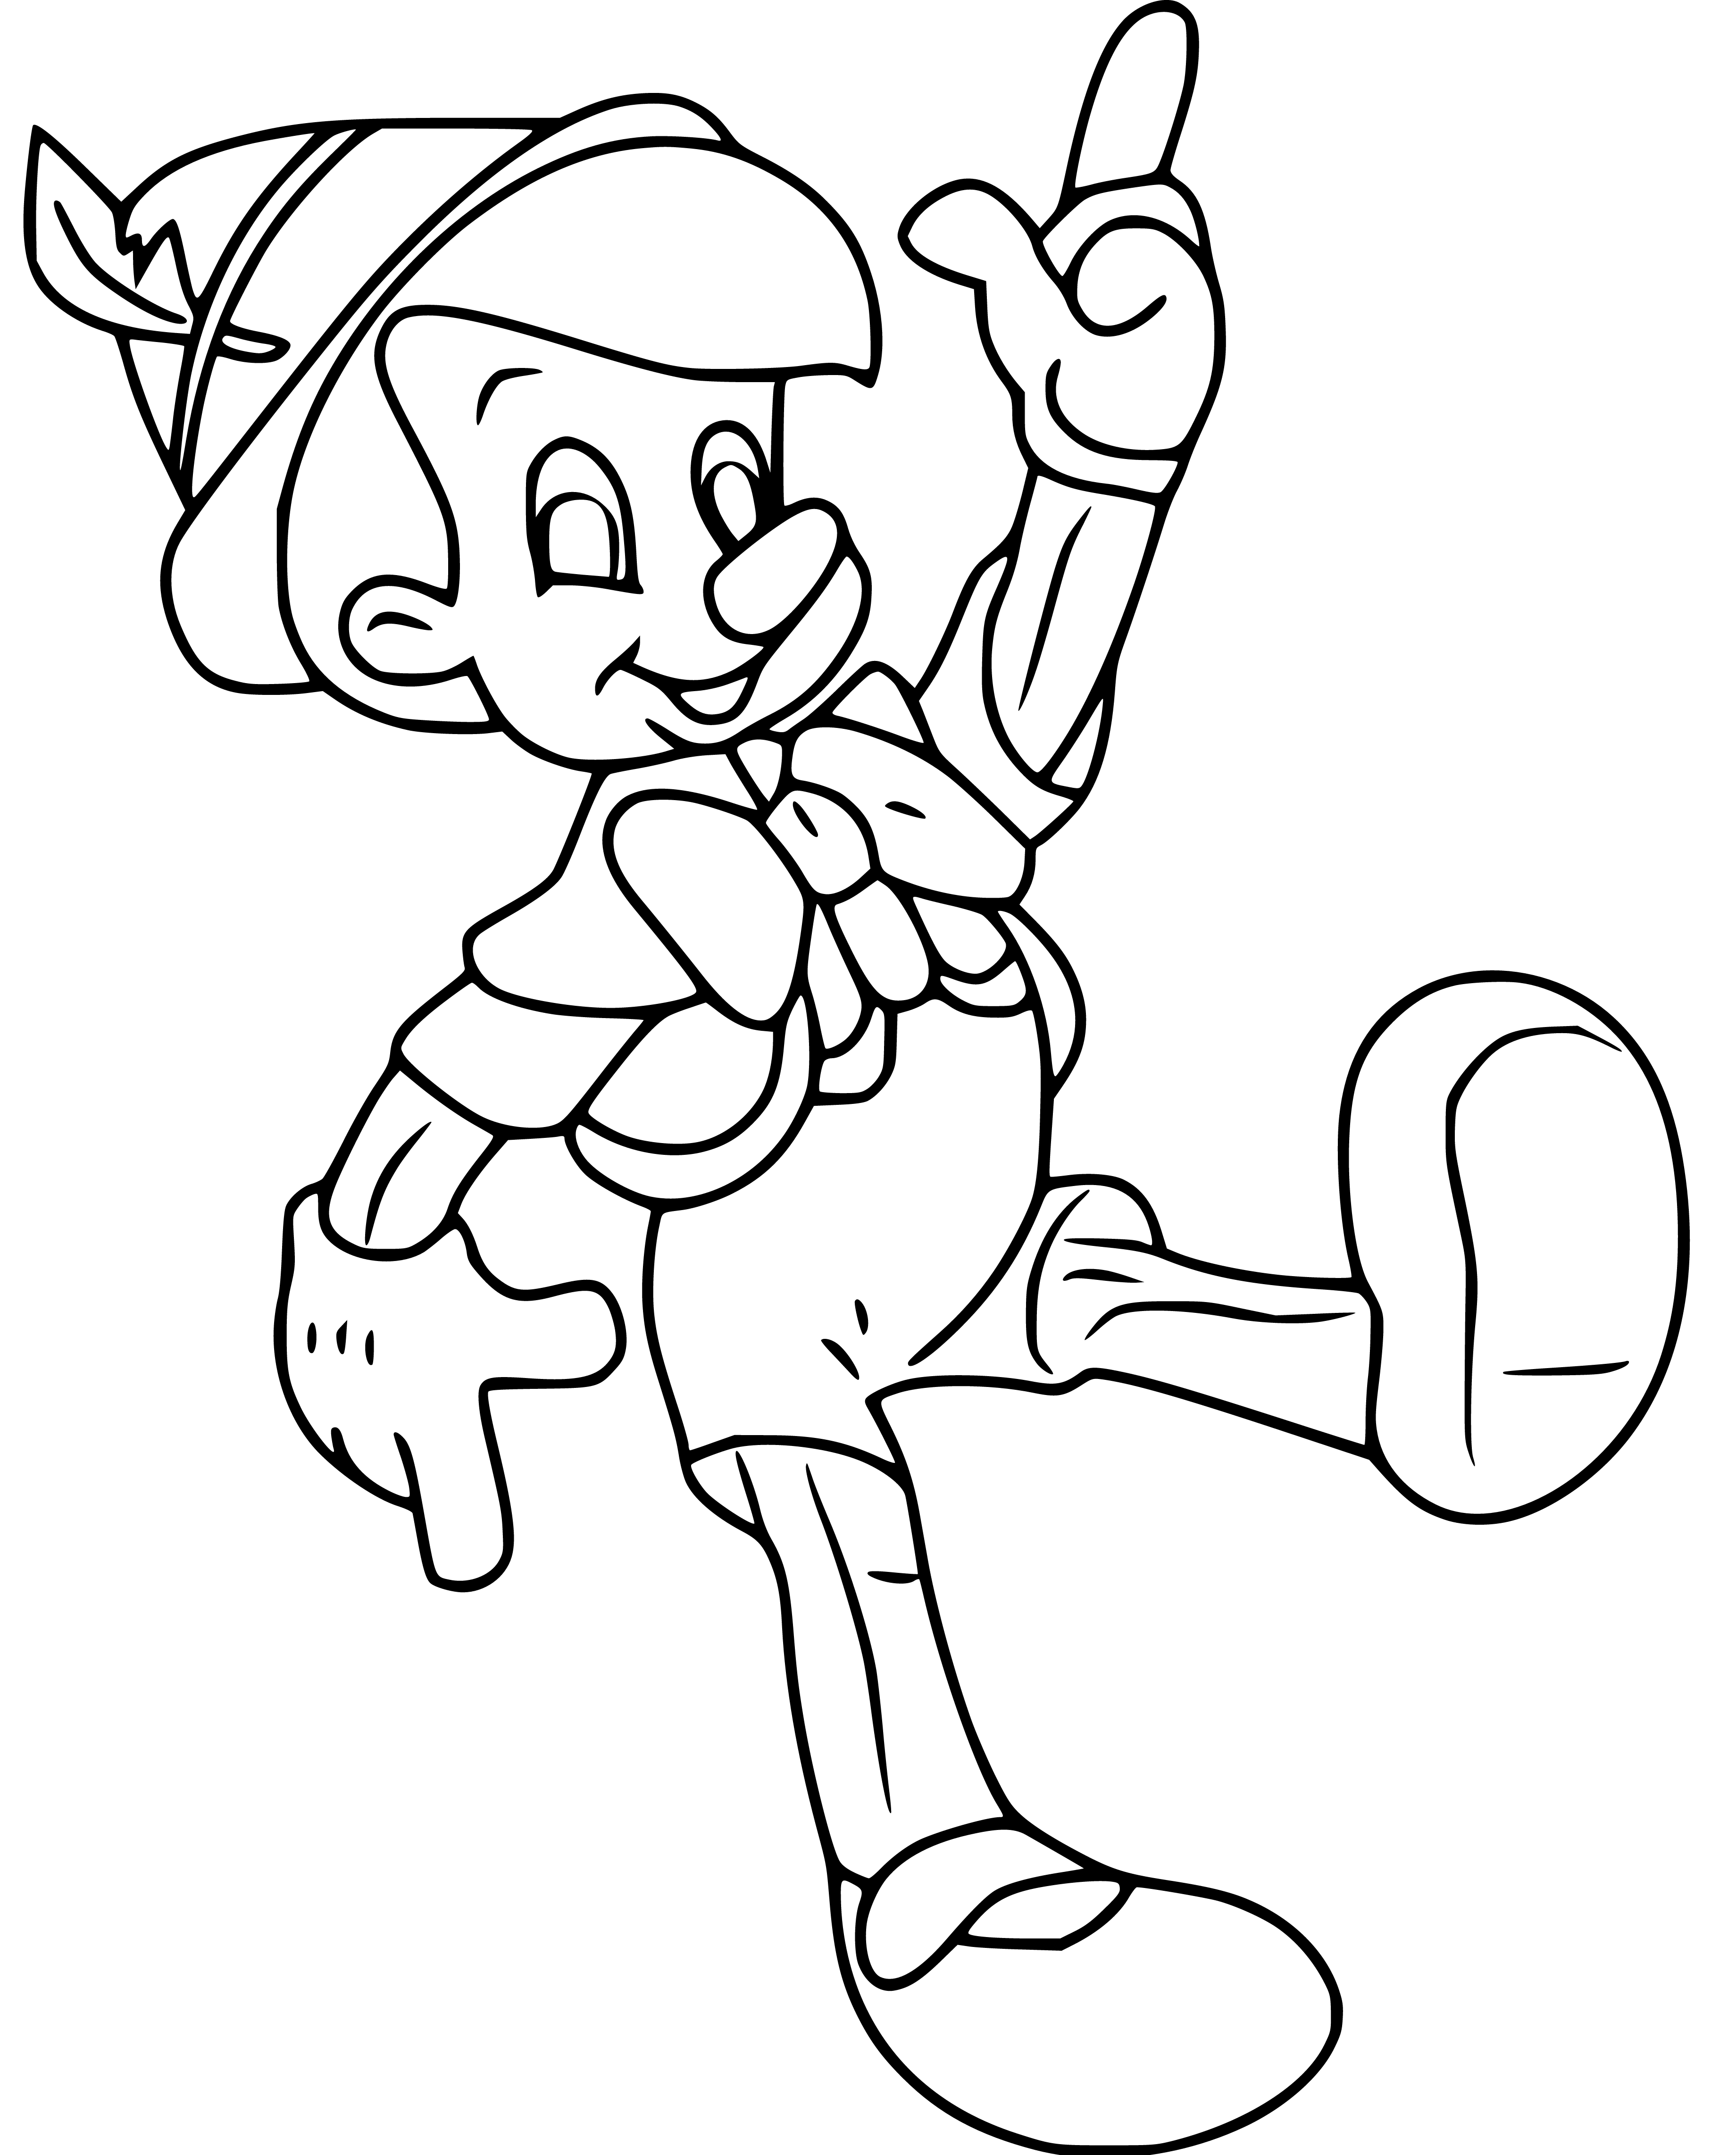 Pinocchio Easy Coloring Page for Kids - SheetalColor.com